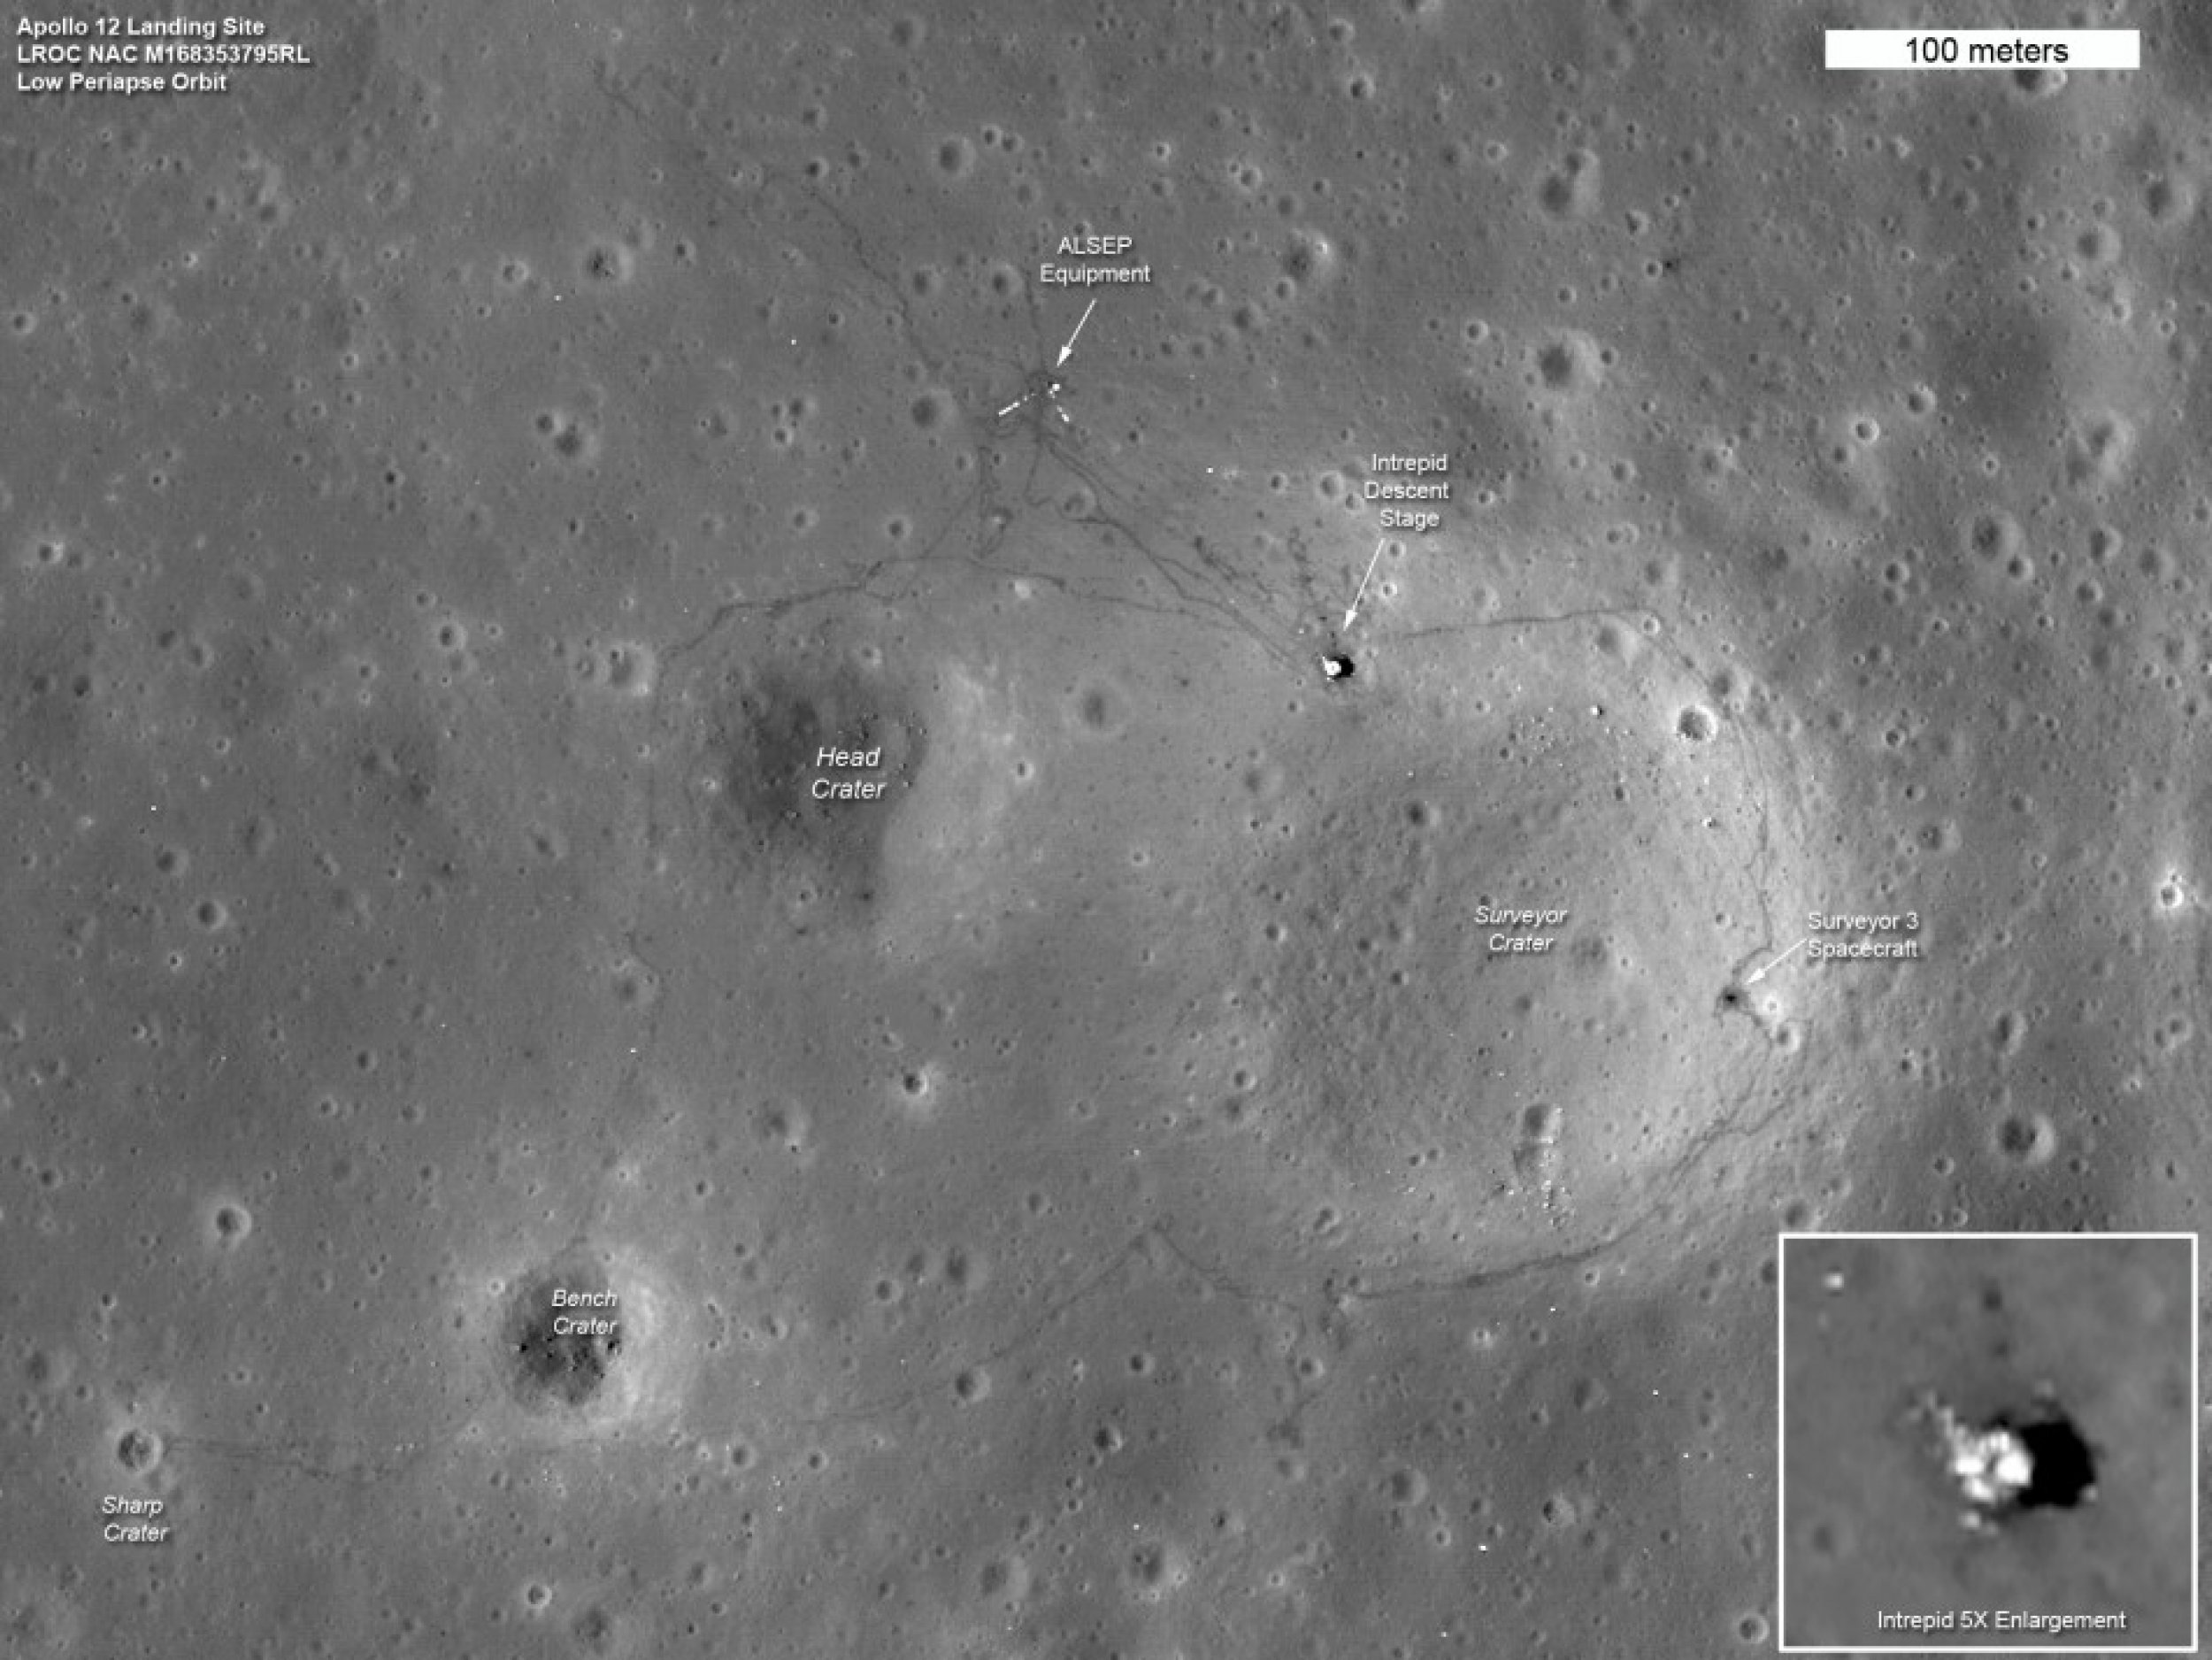 LRO image of the Apollo 12 landing site